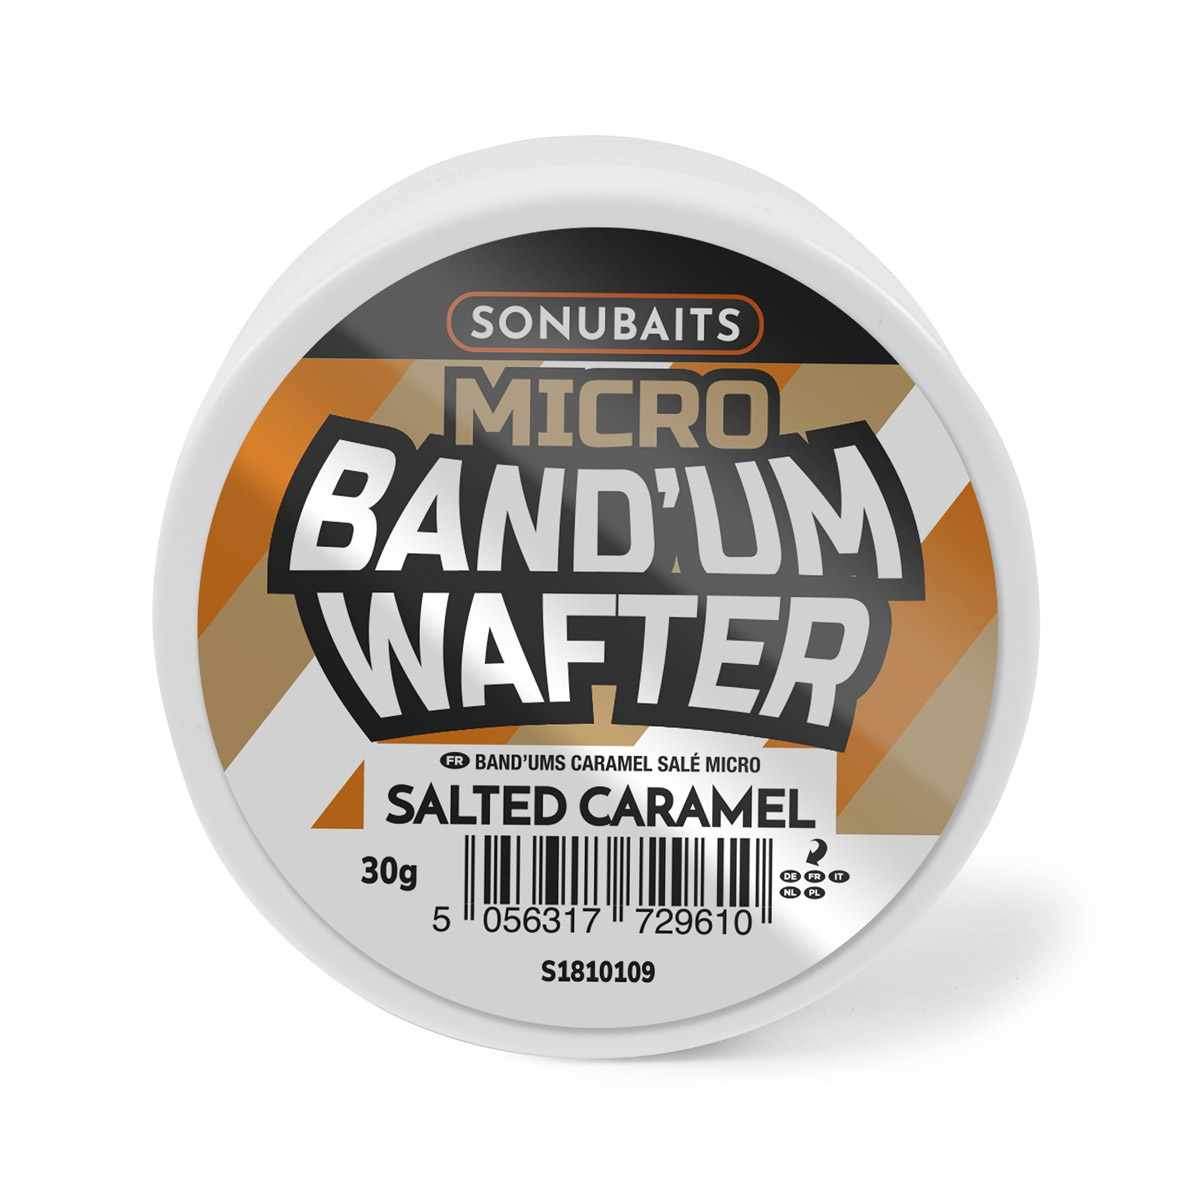 Sonubaits Micro Band'um Wafter Salted Caramel